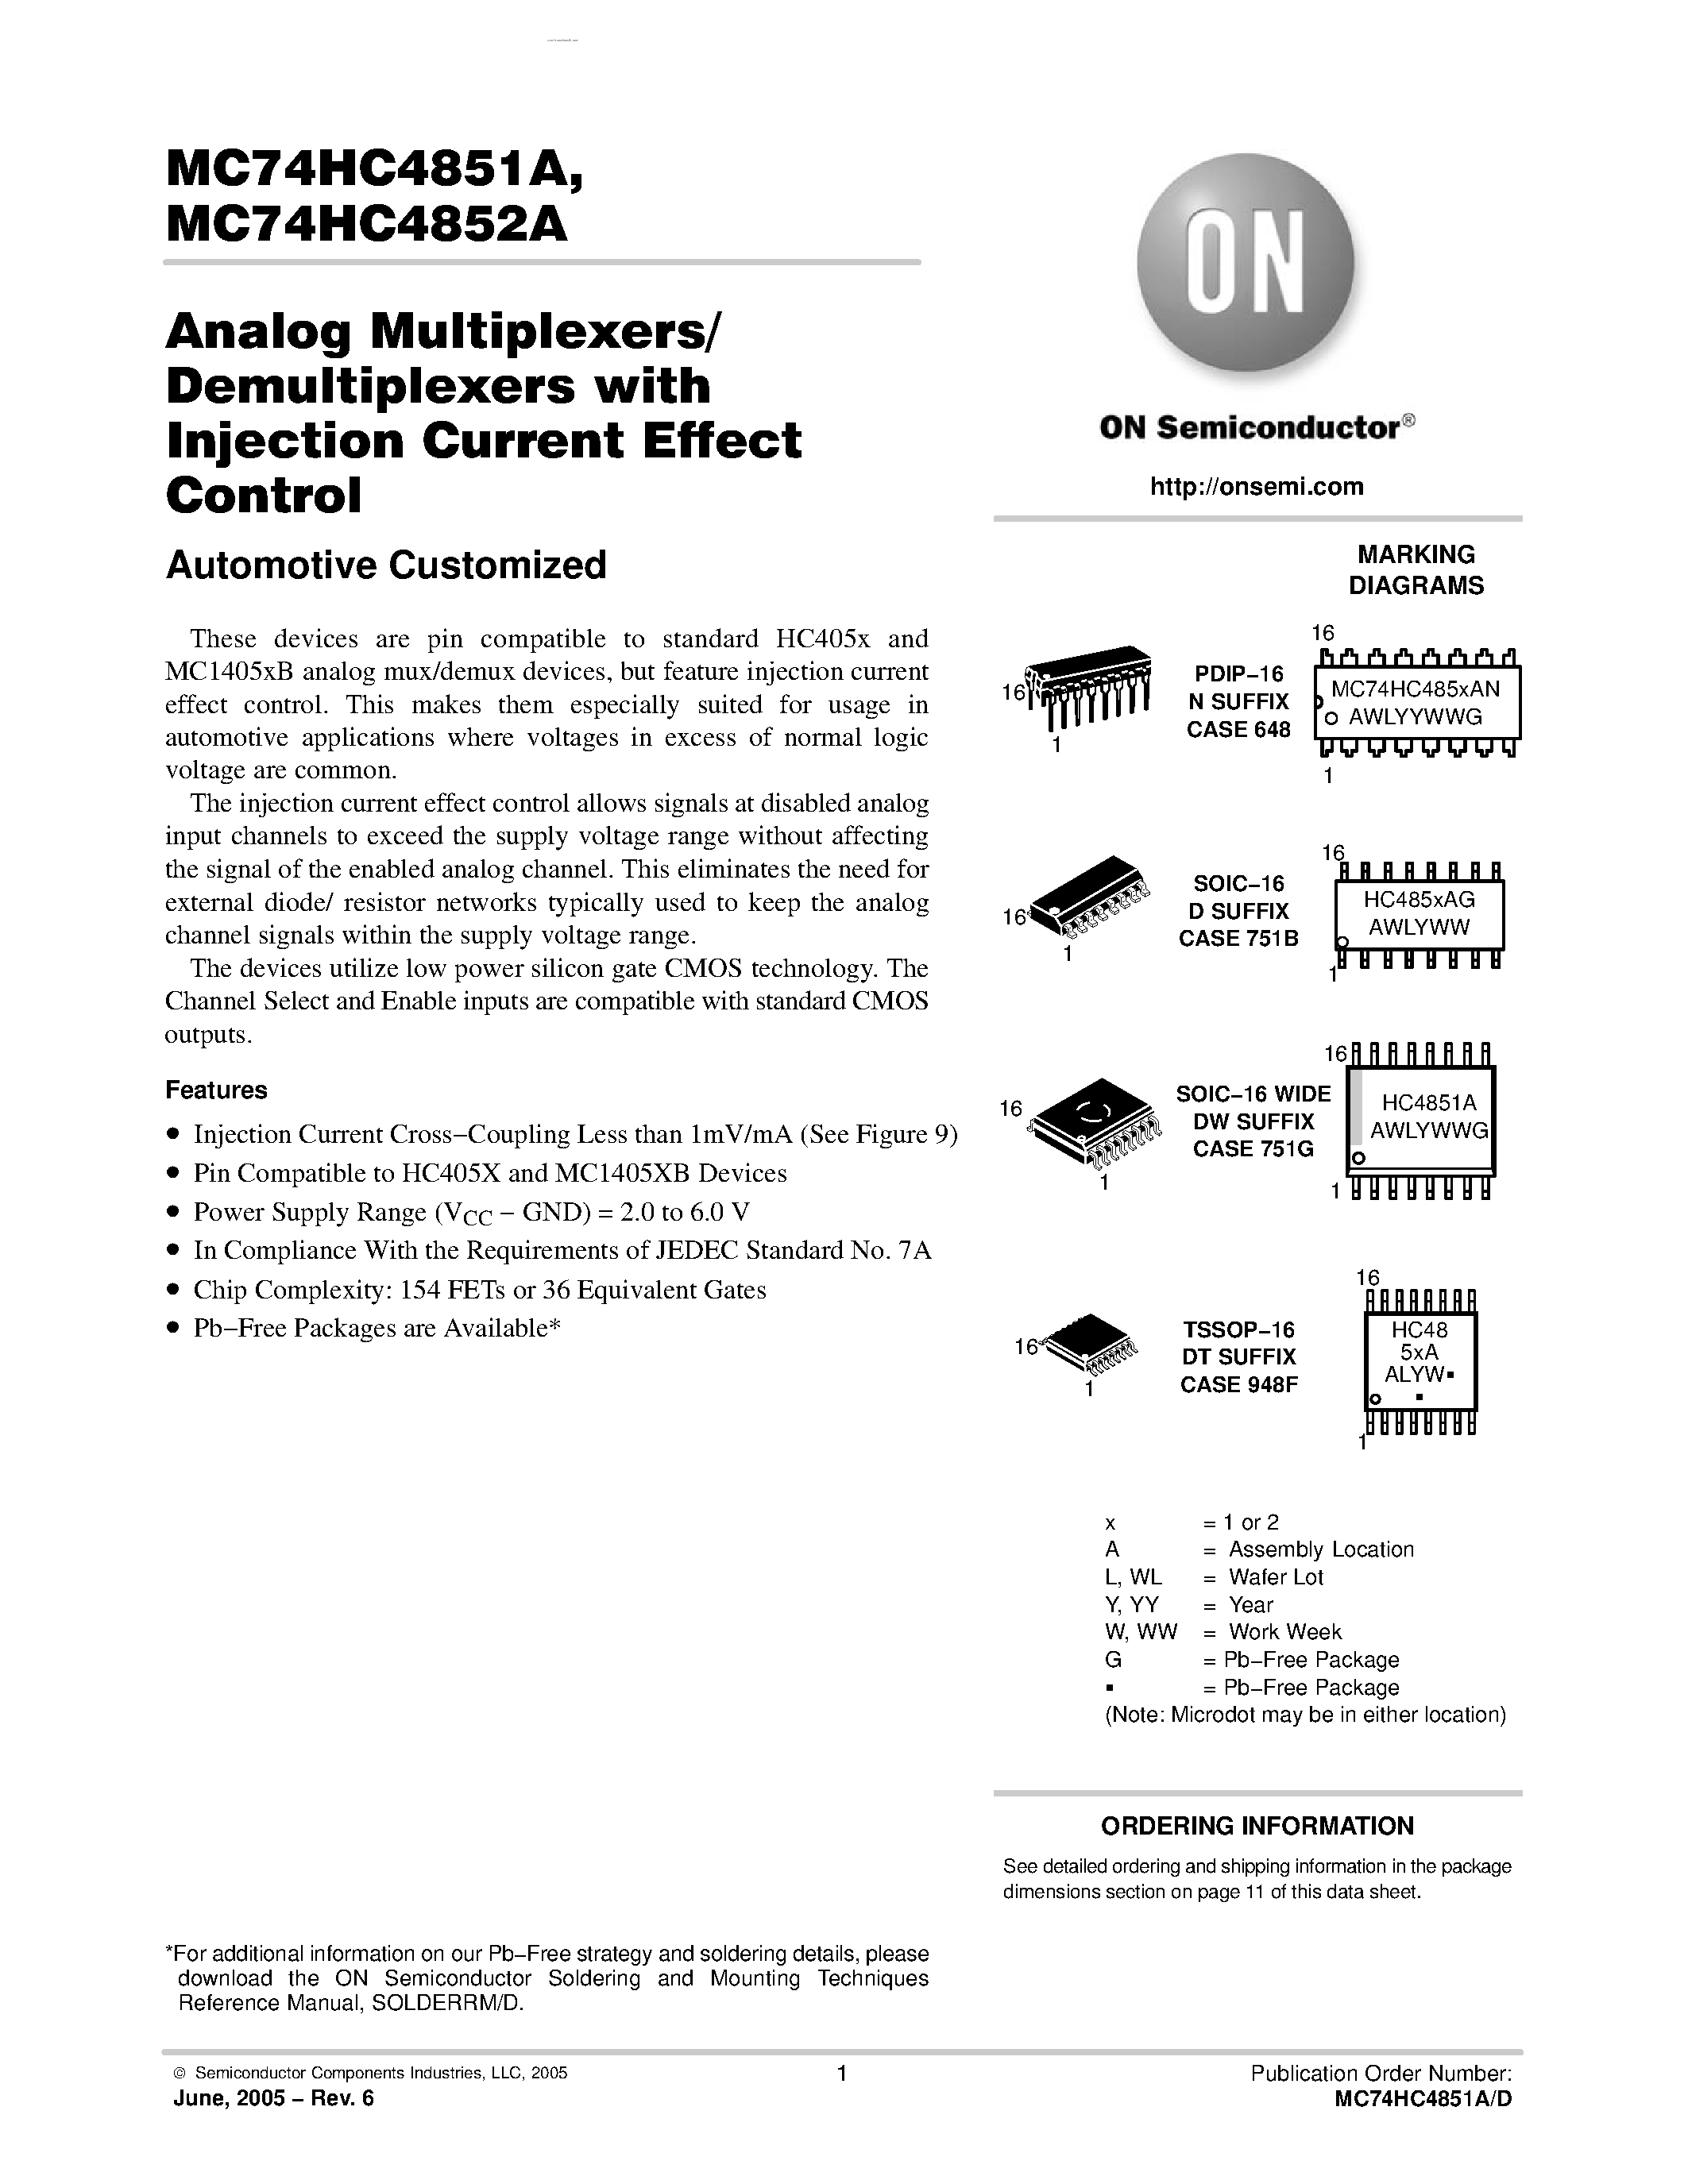 Datasheet MC74HC4851A - (MC74HC4851A / MC74HC4852A) Analog Multiplexers/Demultiplexers page 1